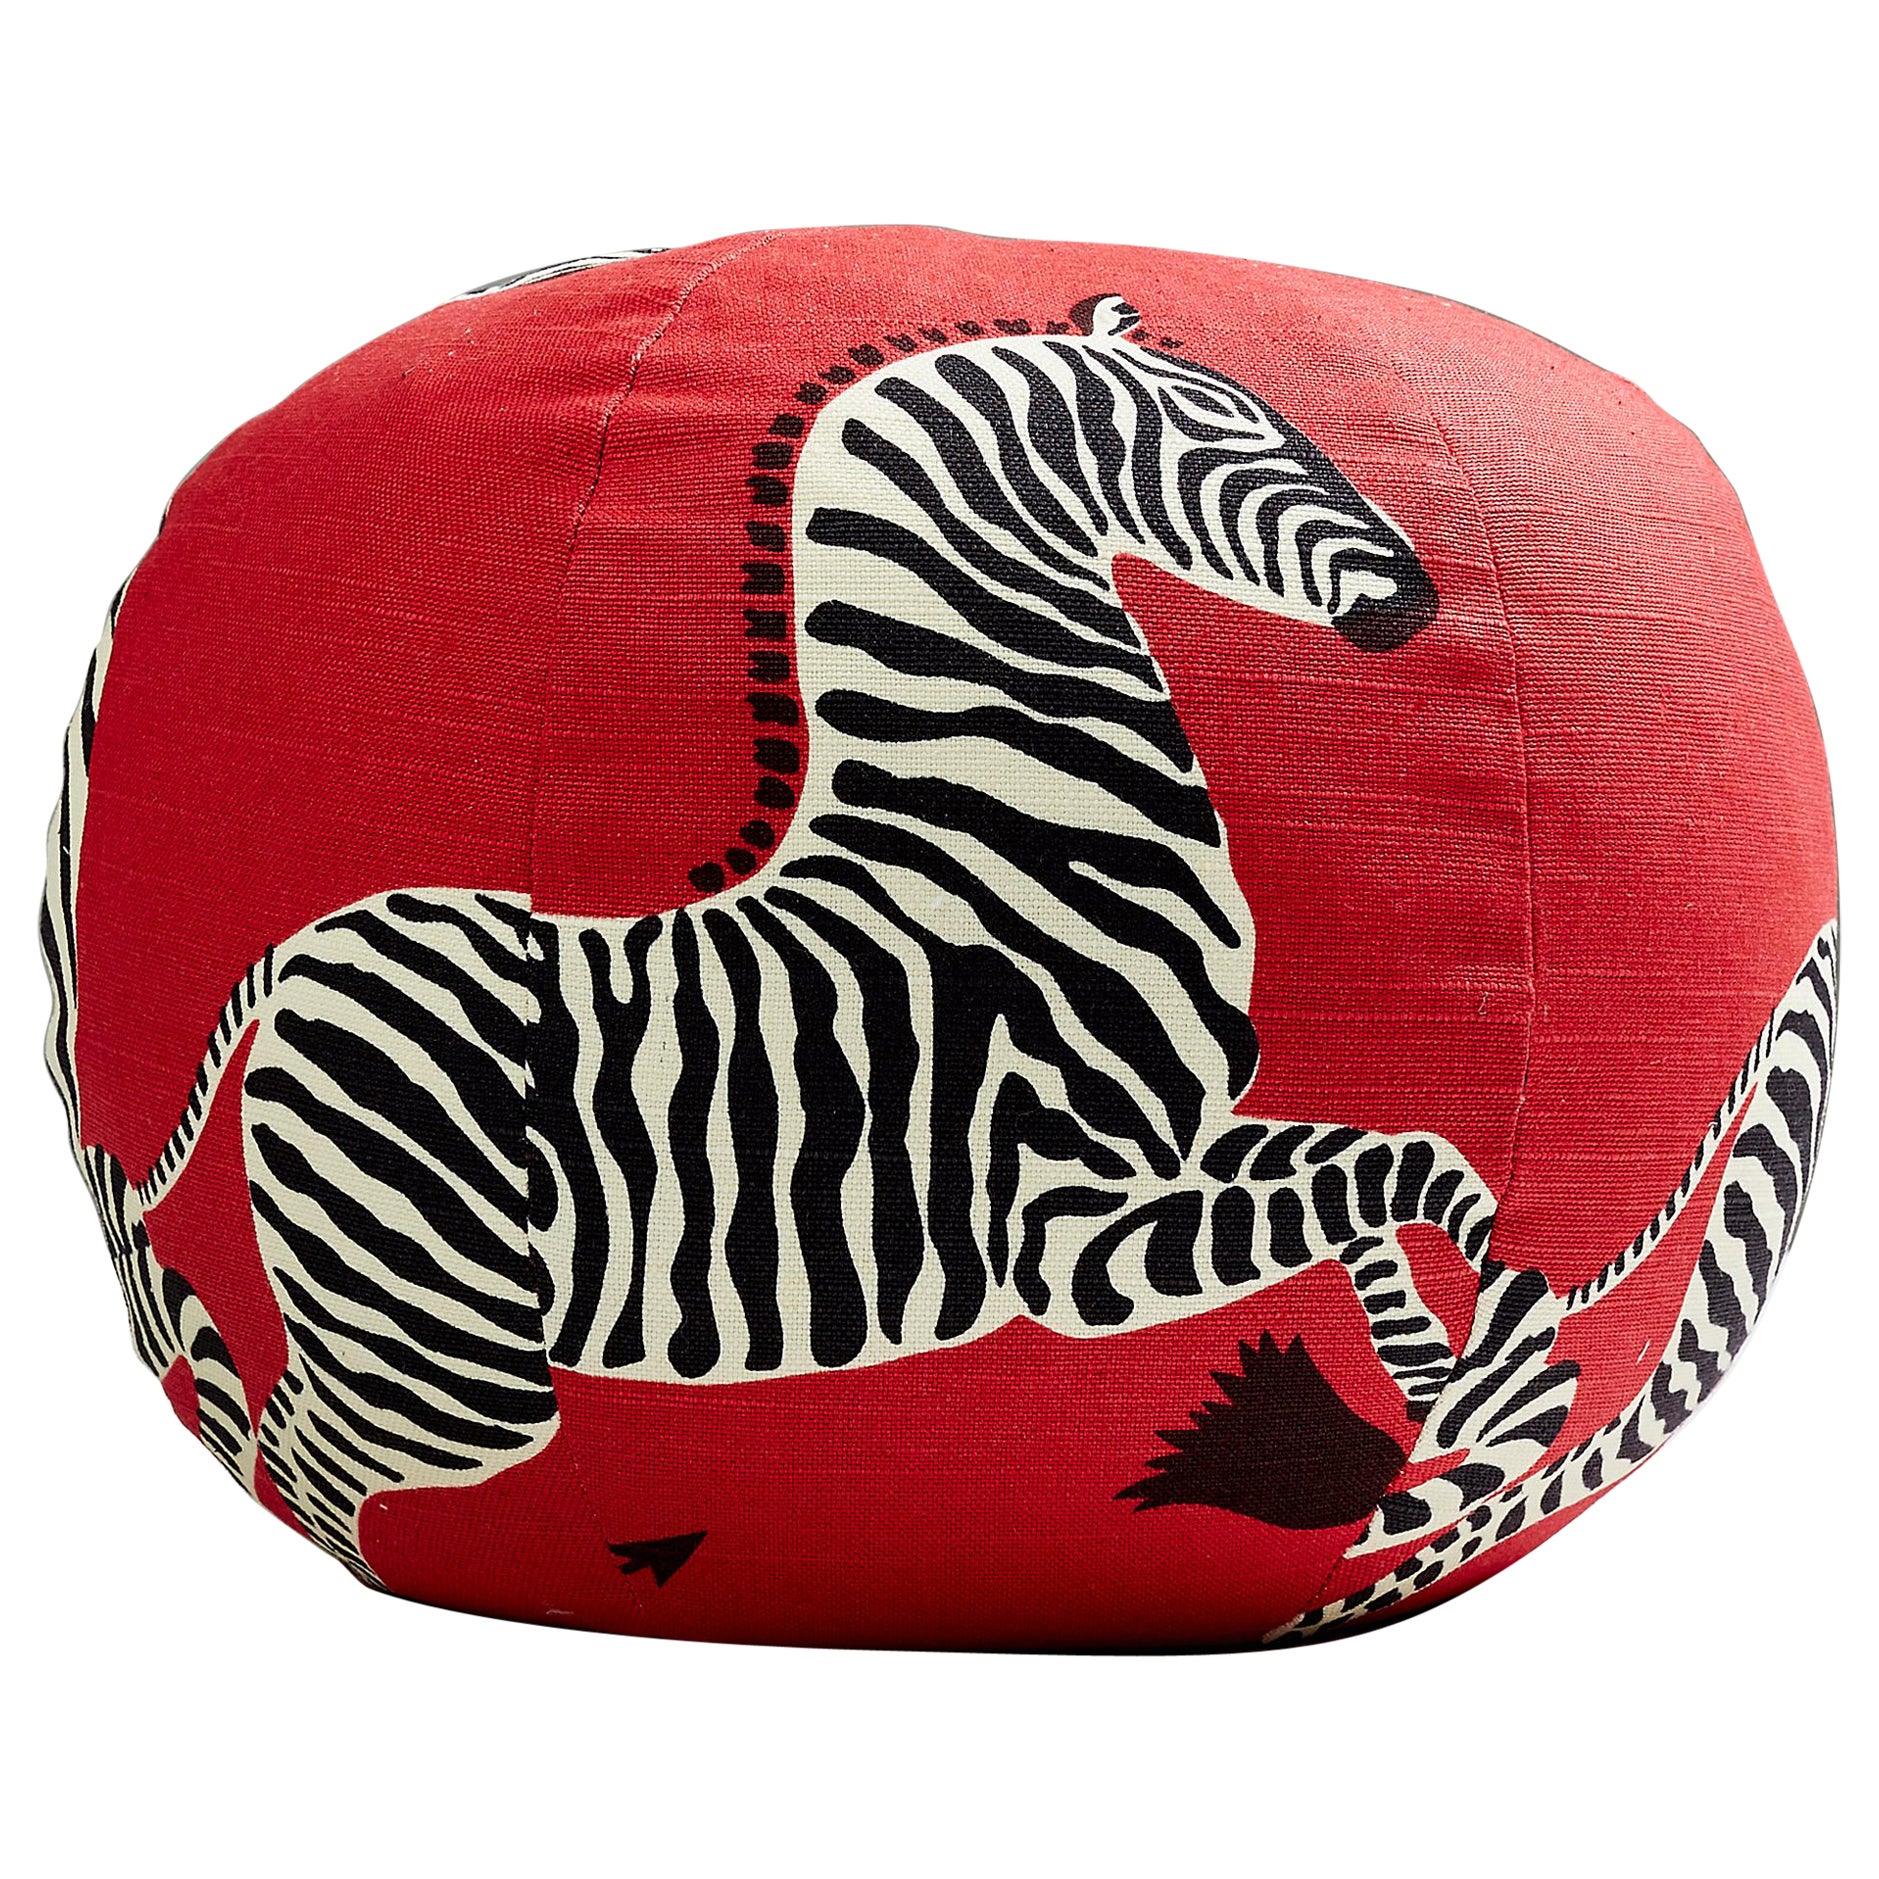 Zebras Sphere Pillow For Sale